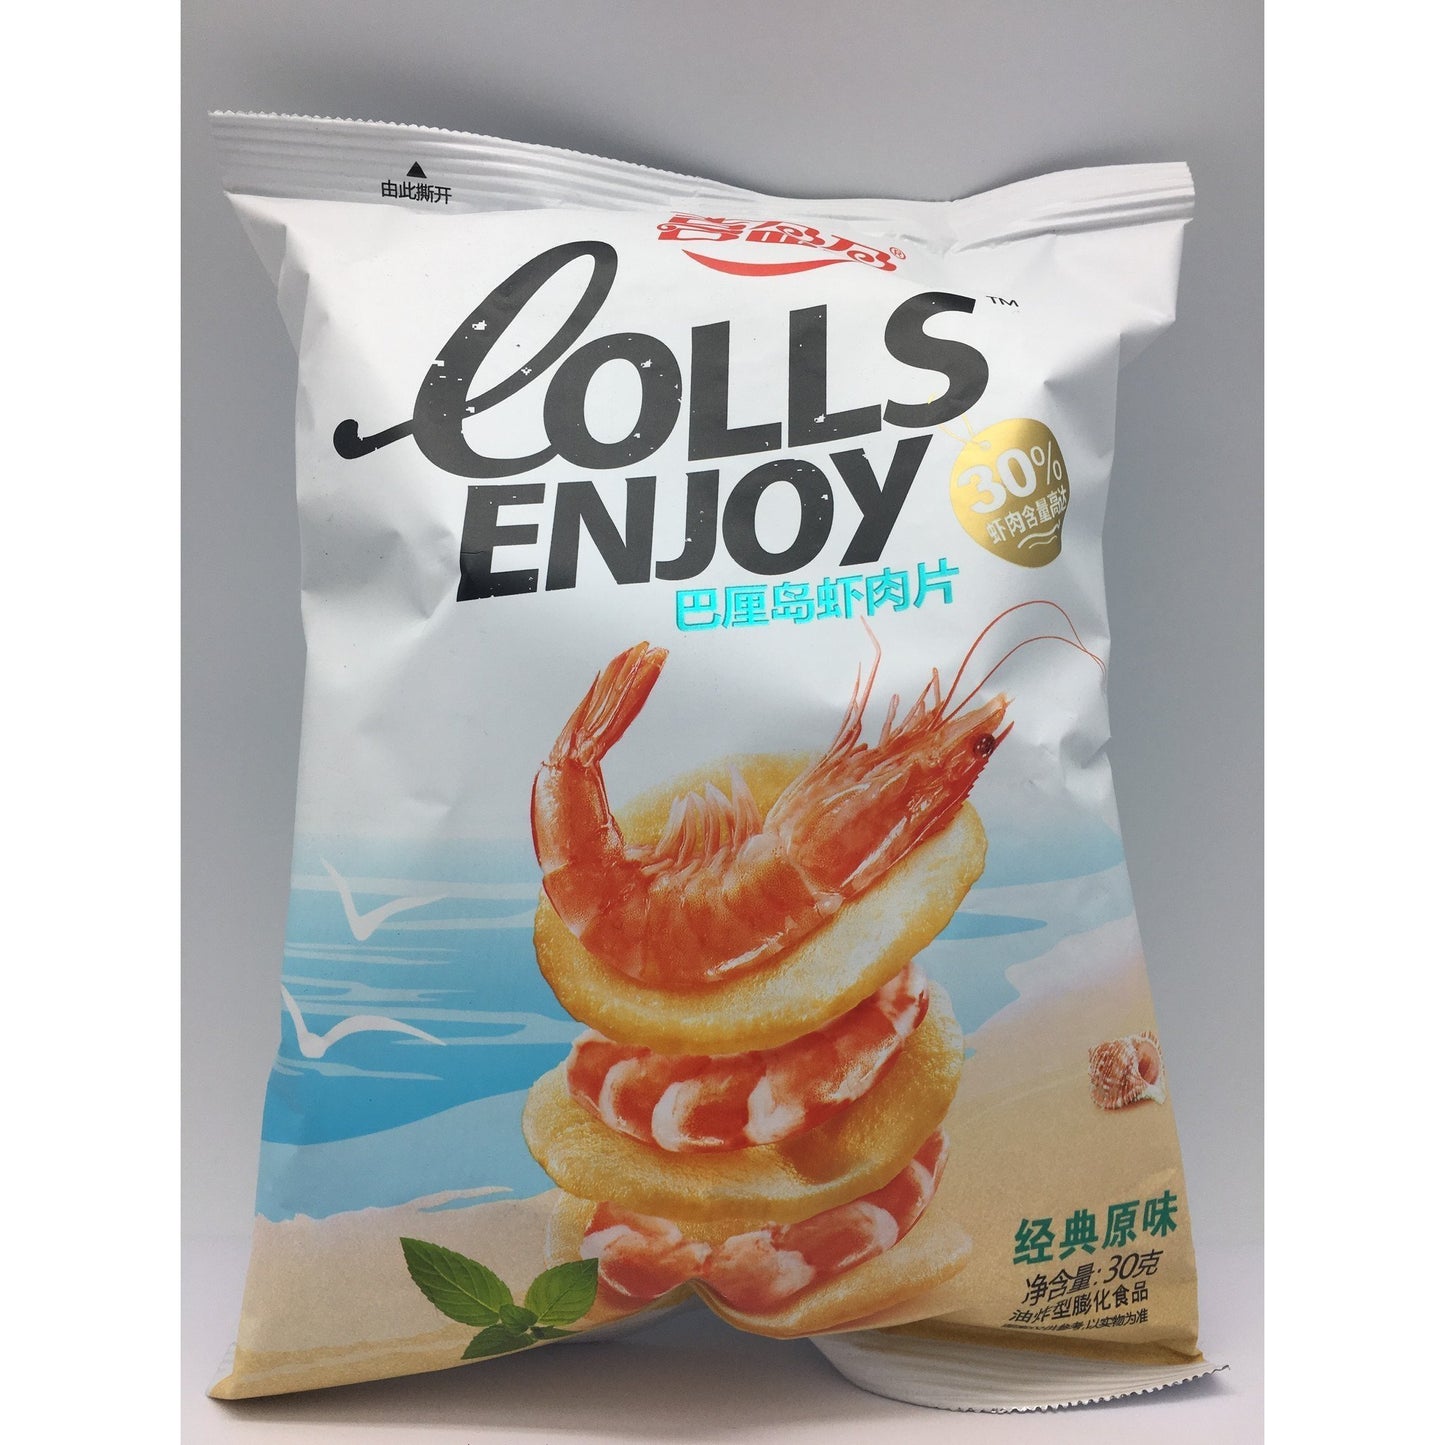 J067BO COLLS Enjoy - (Mint) Prawn Chips 30g - 20 bags  / 1 CTN - New Eastland Pty Ltd - Asian food wholesalers